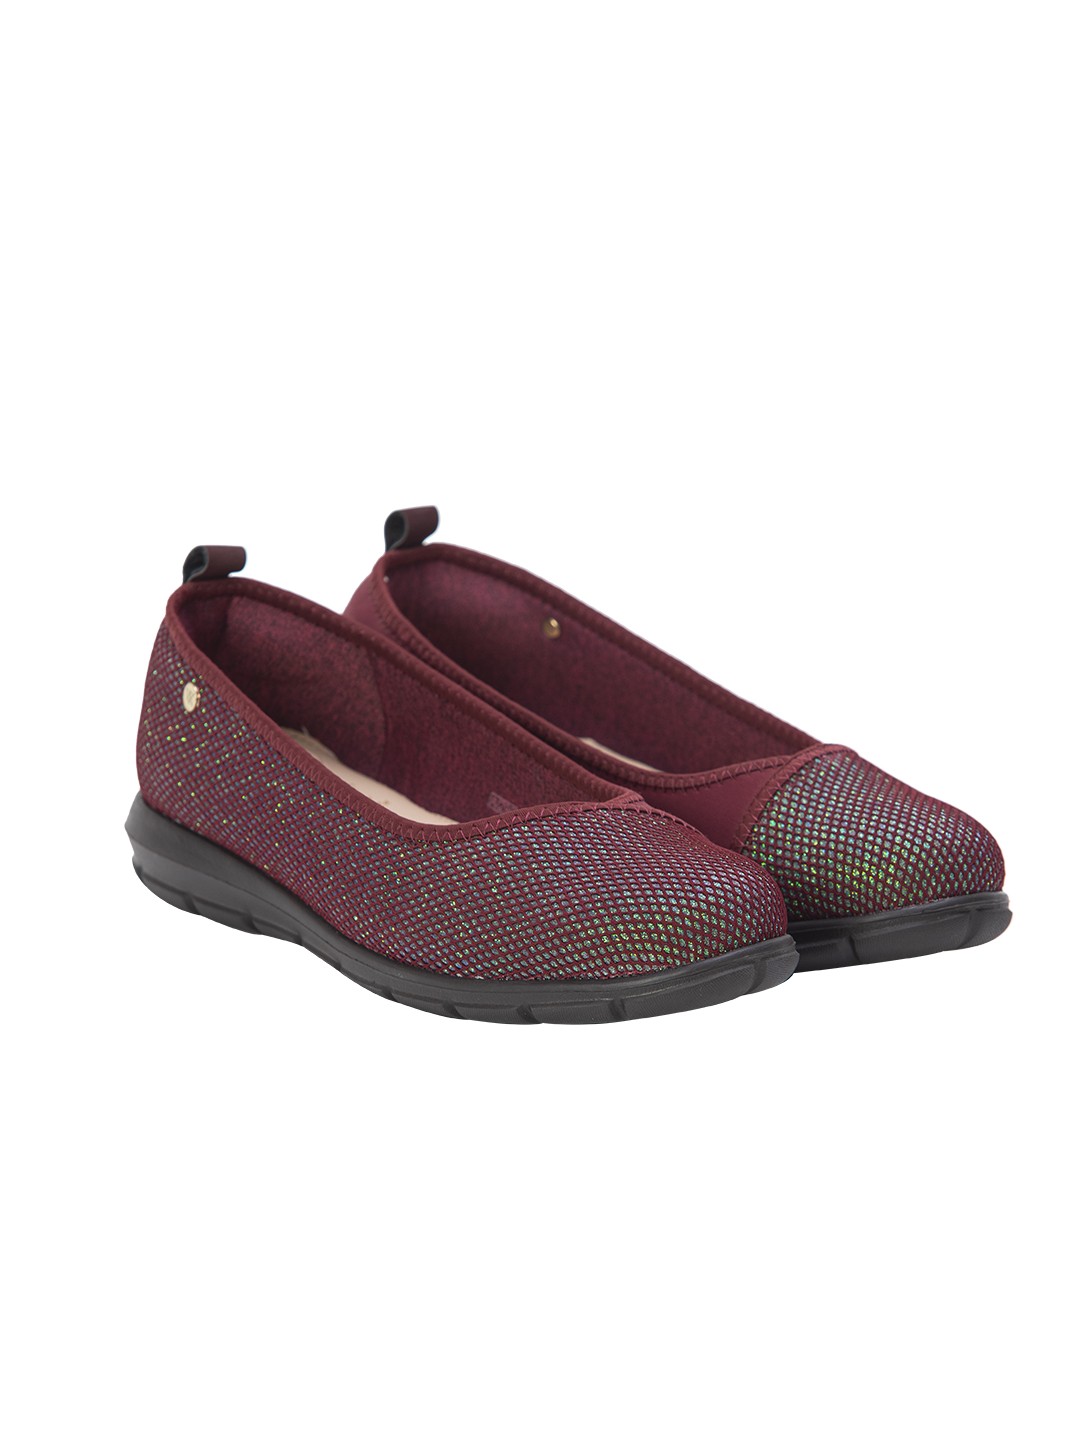 Buy Von Wellx Germany Comfort Pace Mehroon Casual Shoes Online in Tamil Nadu